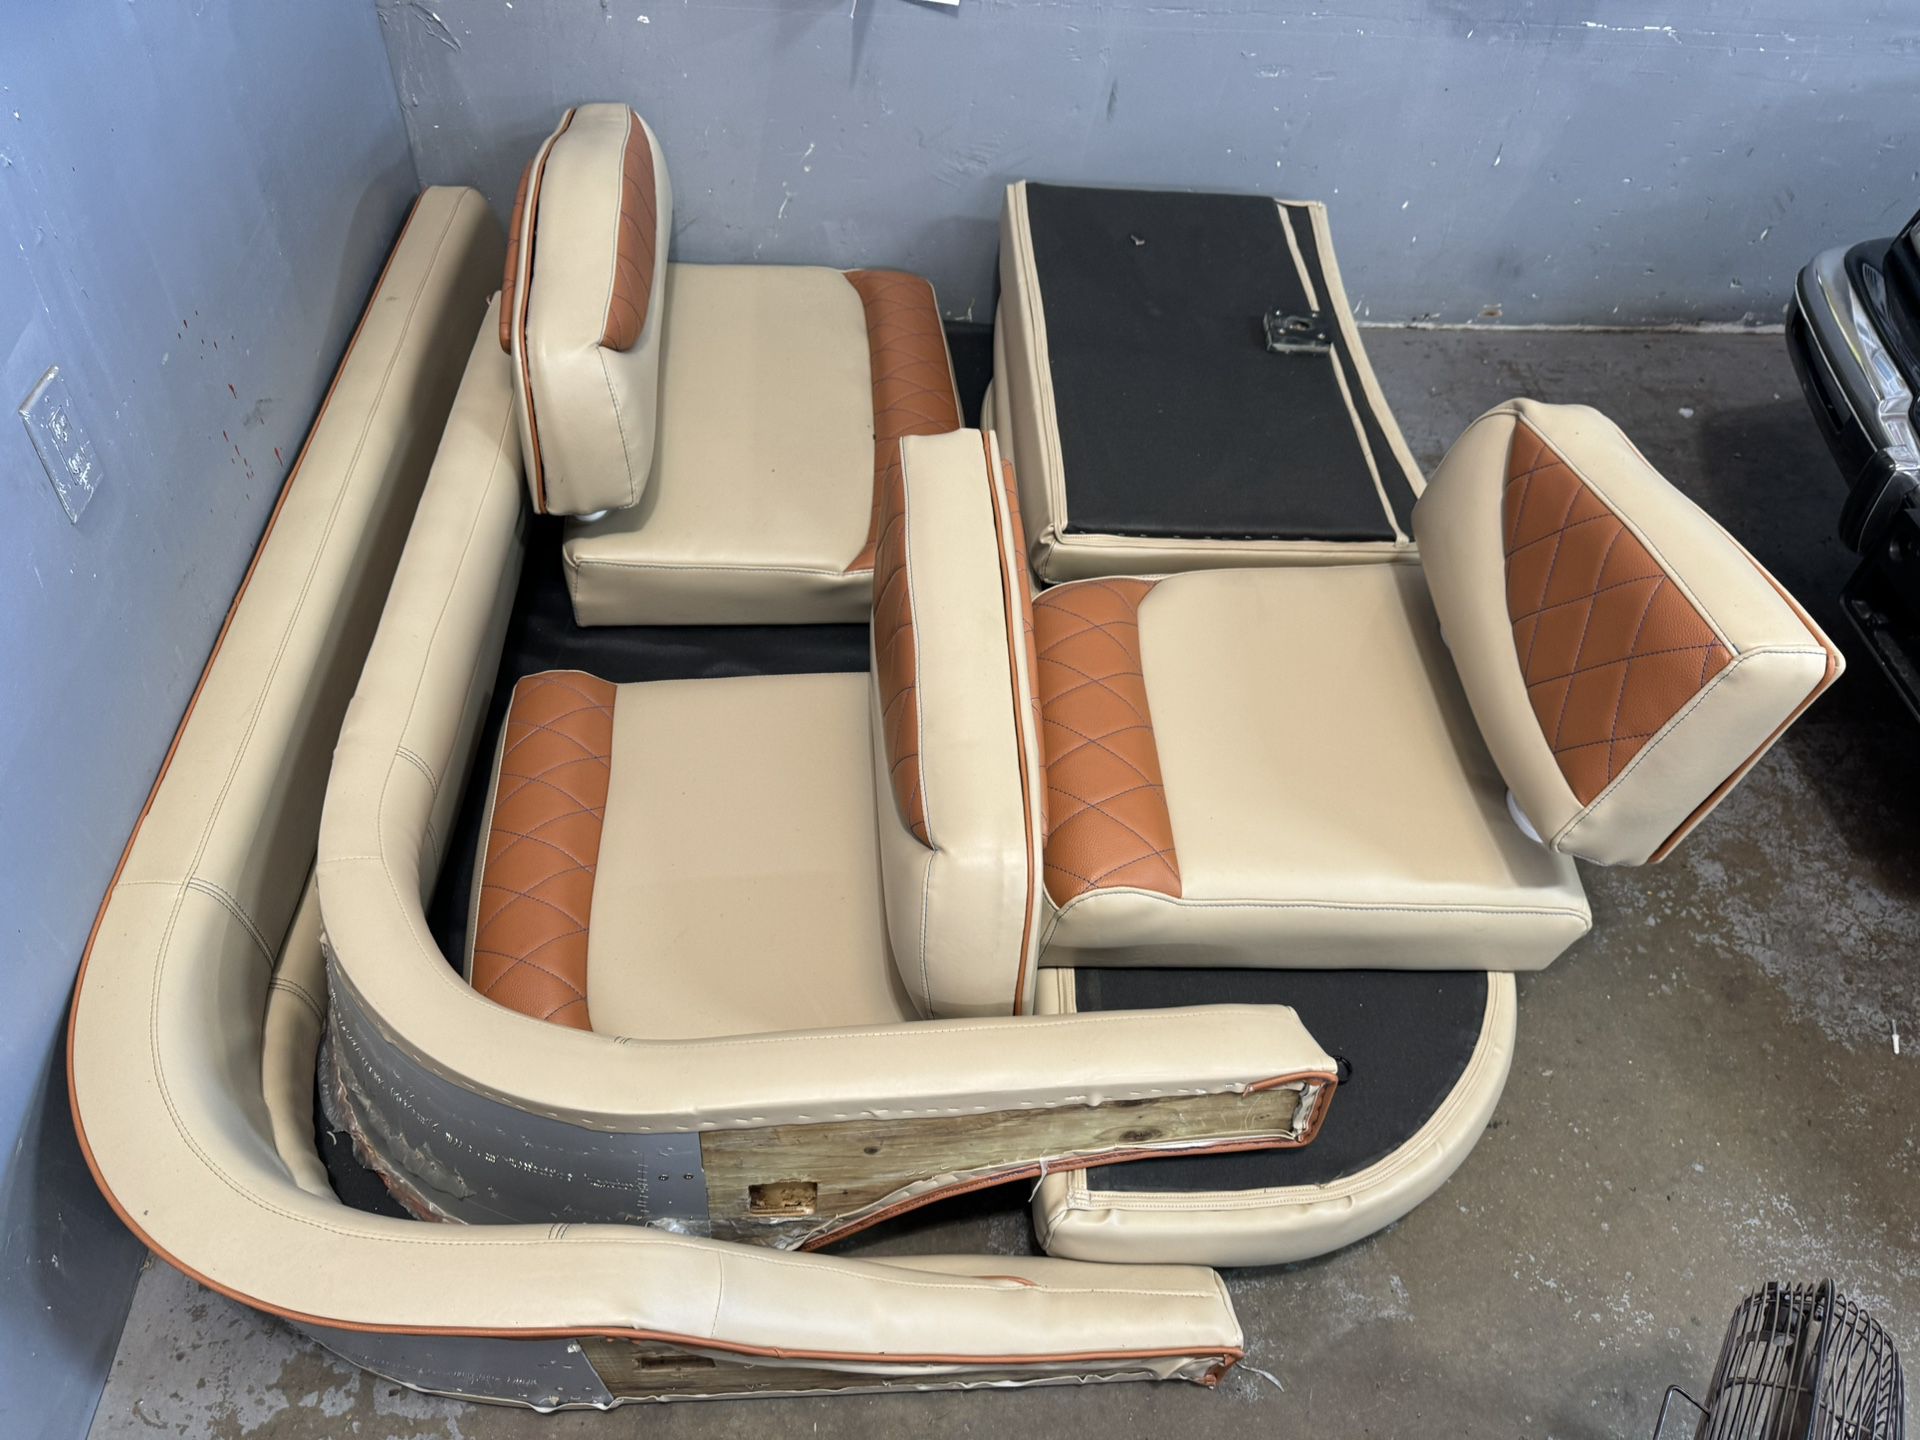 2001 Maxum 37 SCR exterior deck seats with full insert